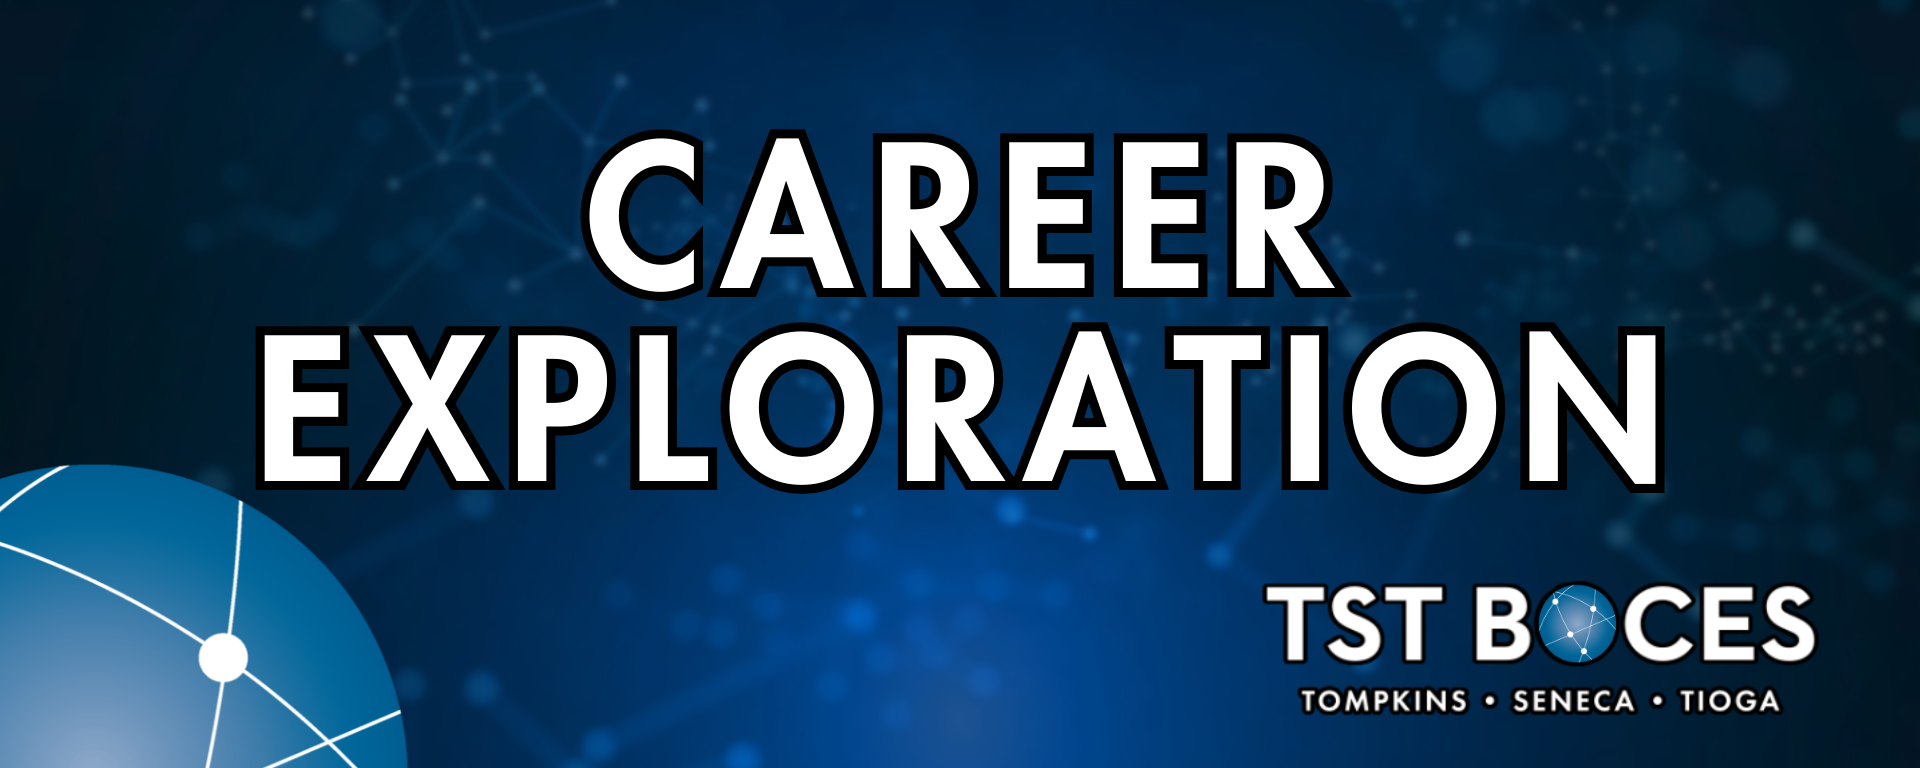 career exploration banner